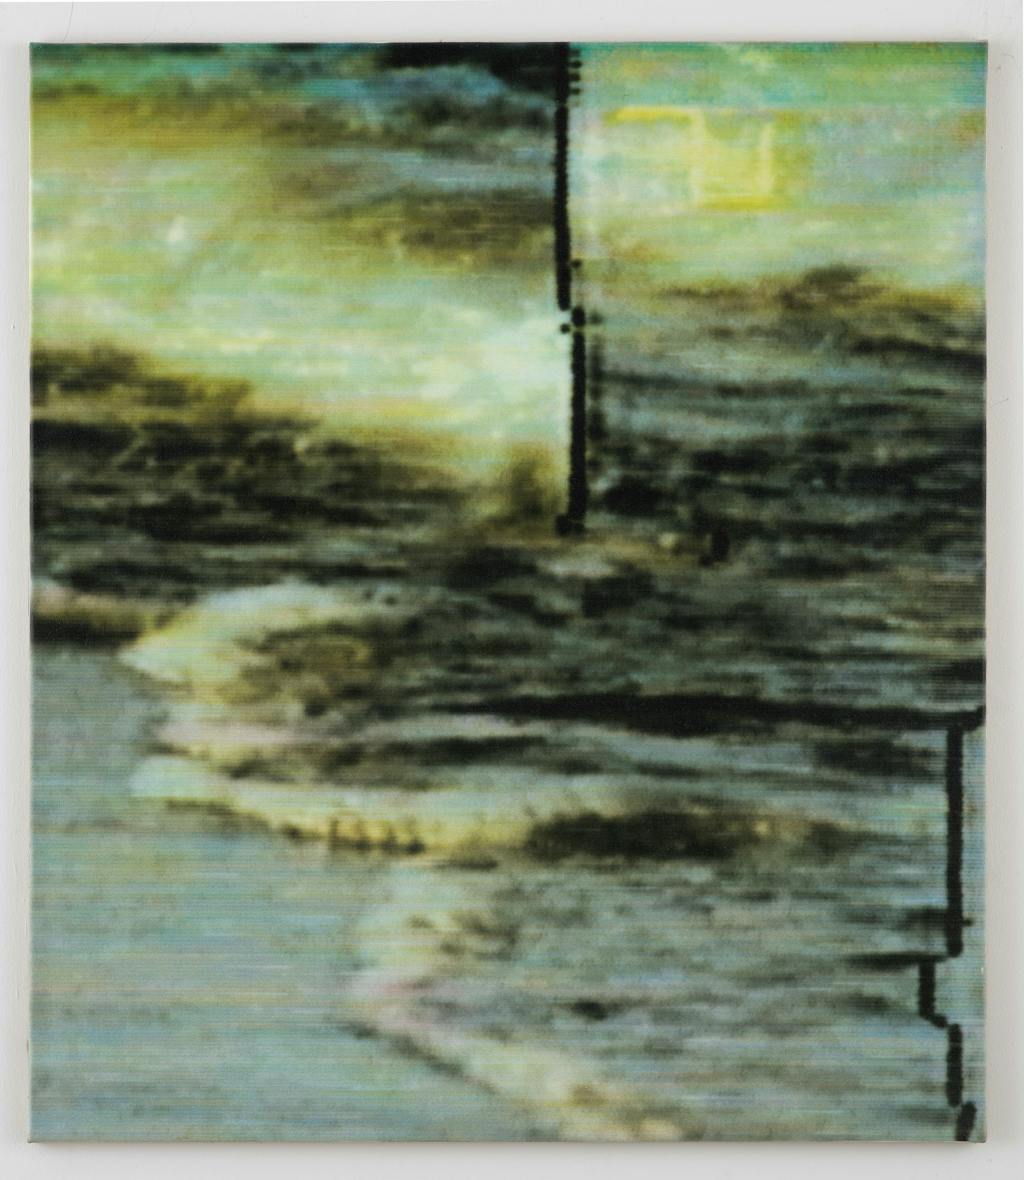 Matthias Groebel
*Hacked Channels #8*, 1999
Acrylic on canvas 
(computer-assisted painting)
115 x 100 cm - © Photo: Simon Vogel, Paris Internationale